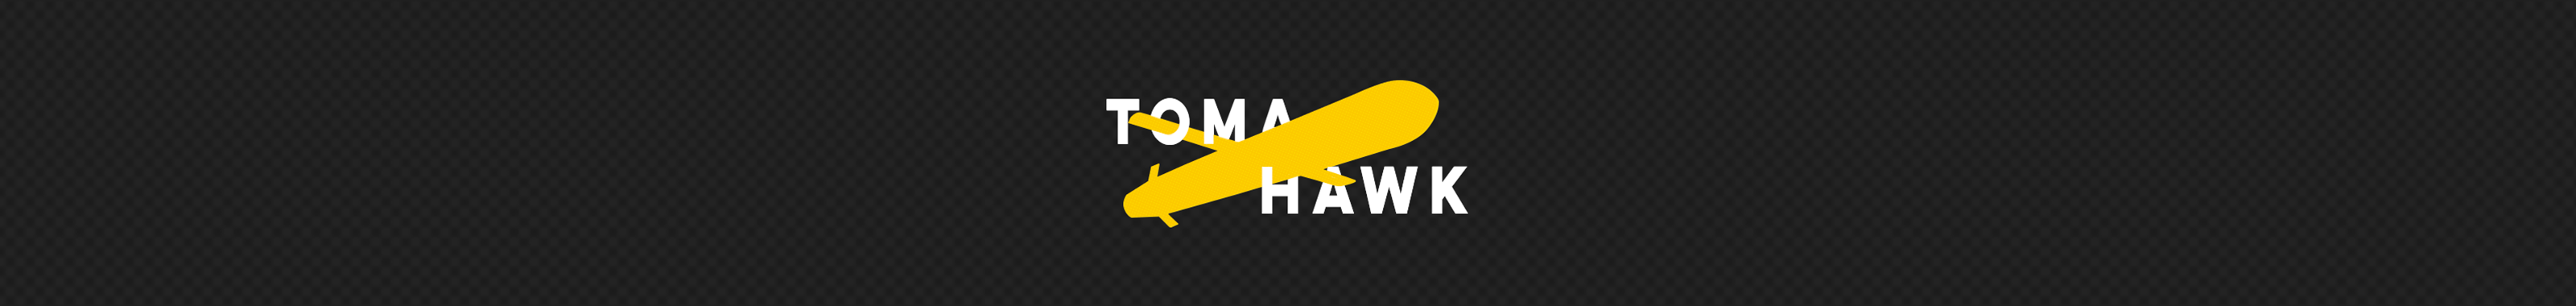 Tomahawk Propaganda's profile banner